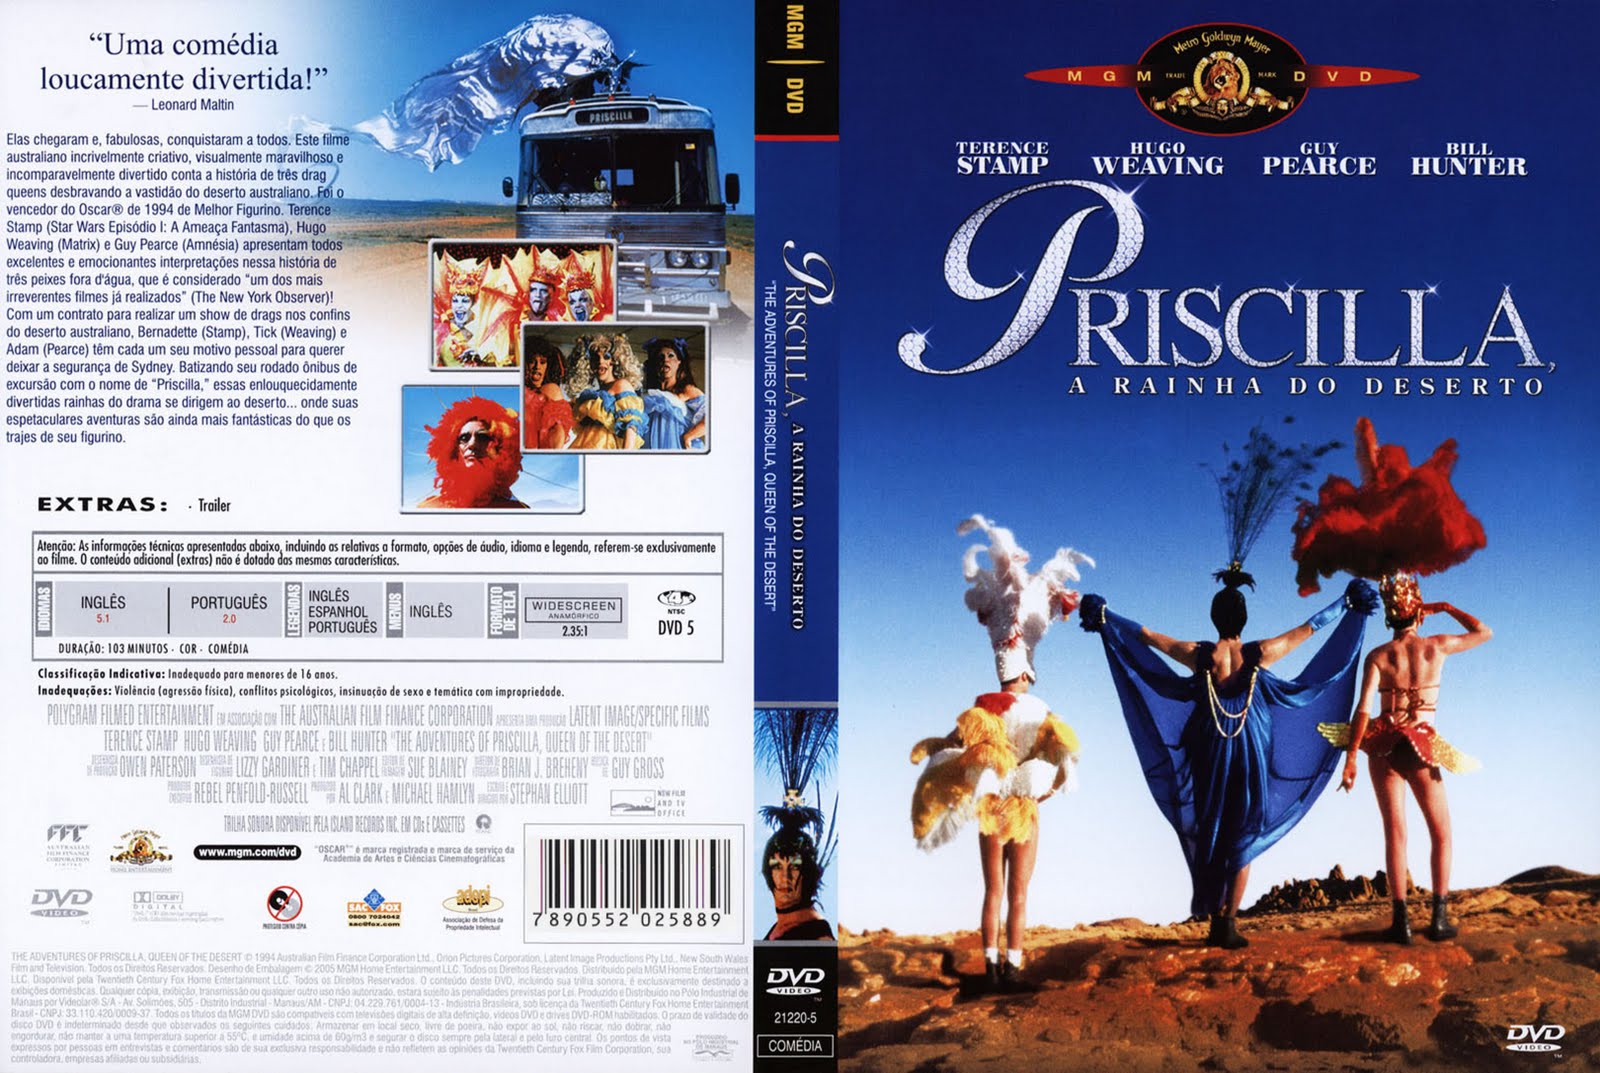 Priscilla, A Rainha Do Deserto [1994]